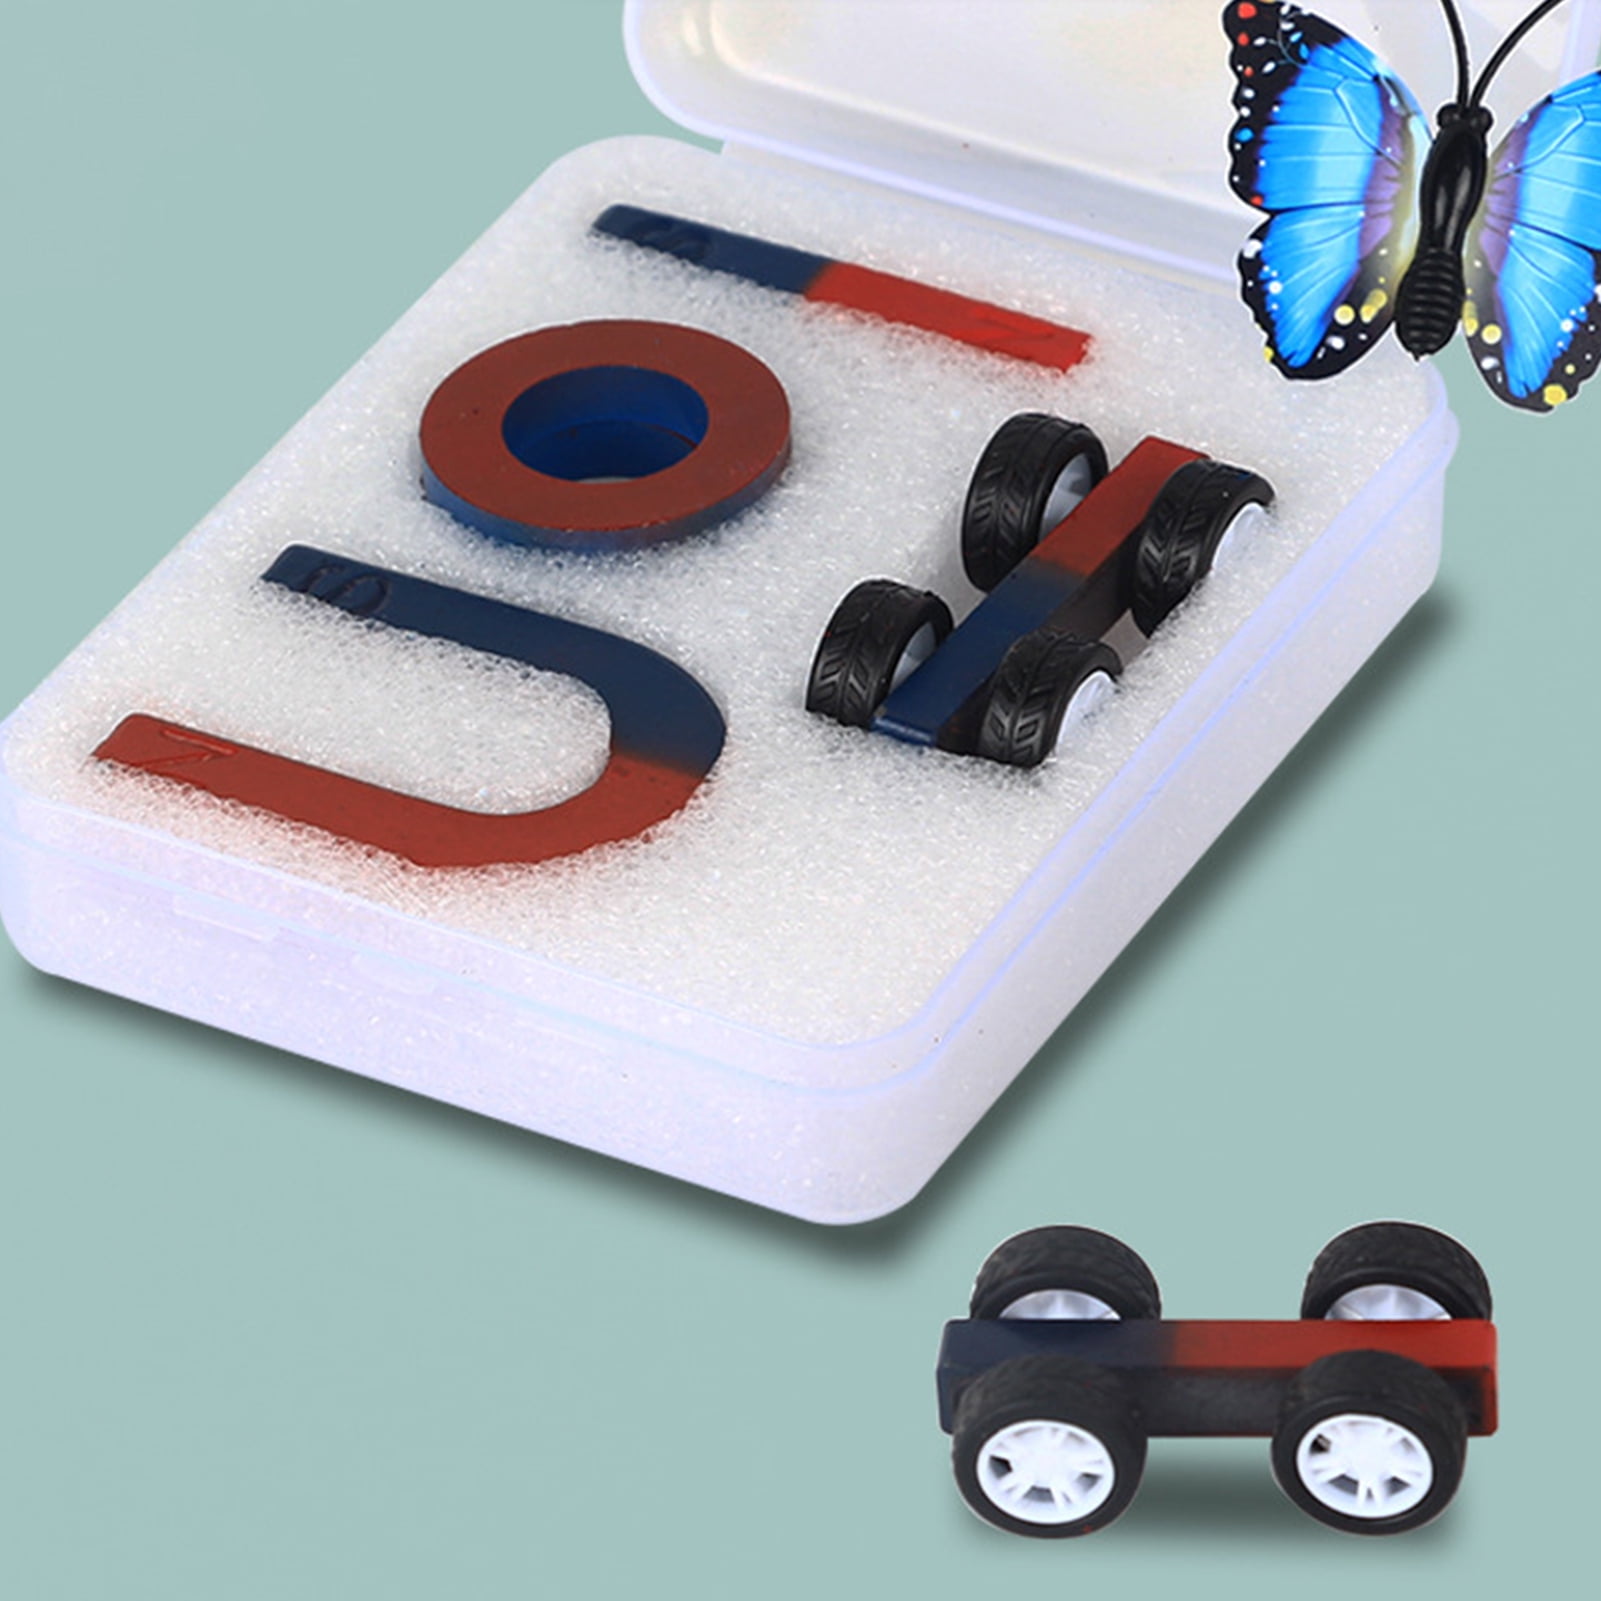 Traditional U Shaped Horseshoe Magnet Kids Toy Teaching Education Tool 3cm 